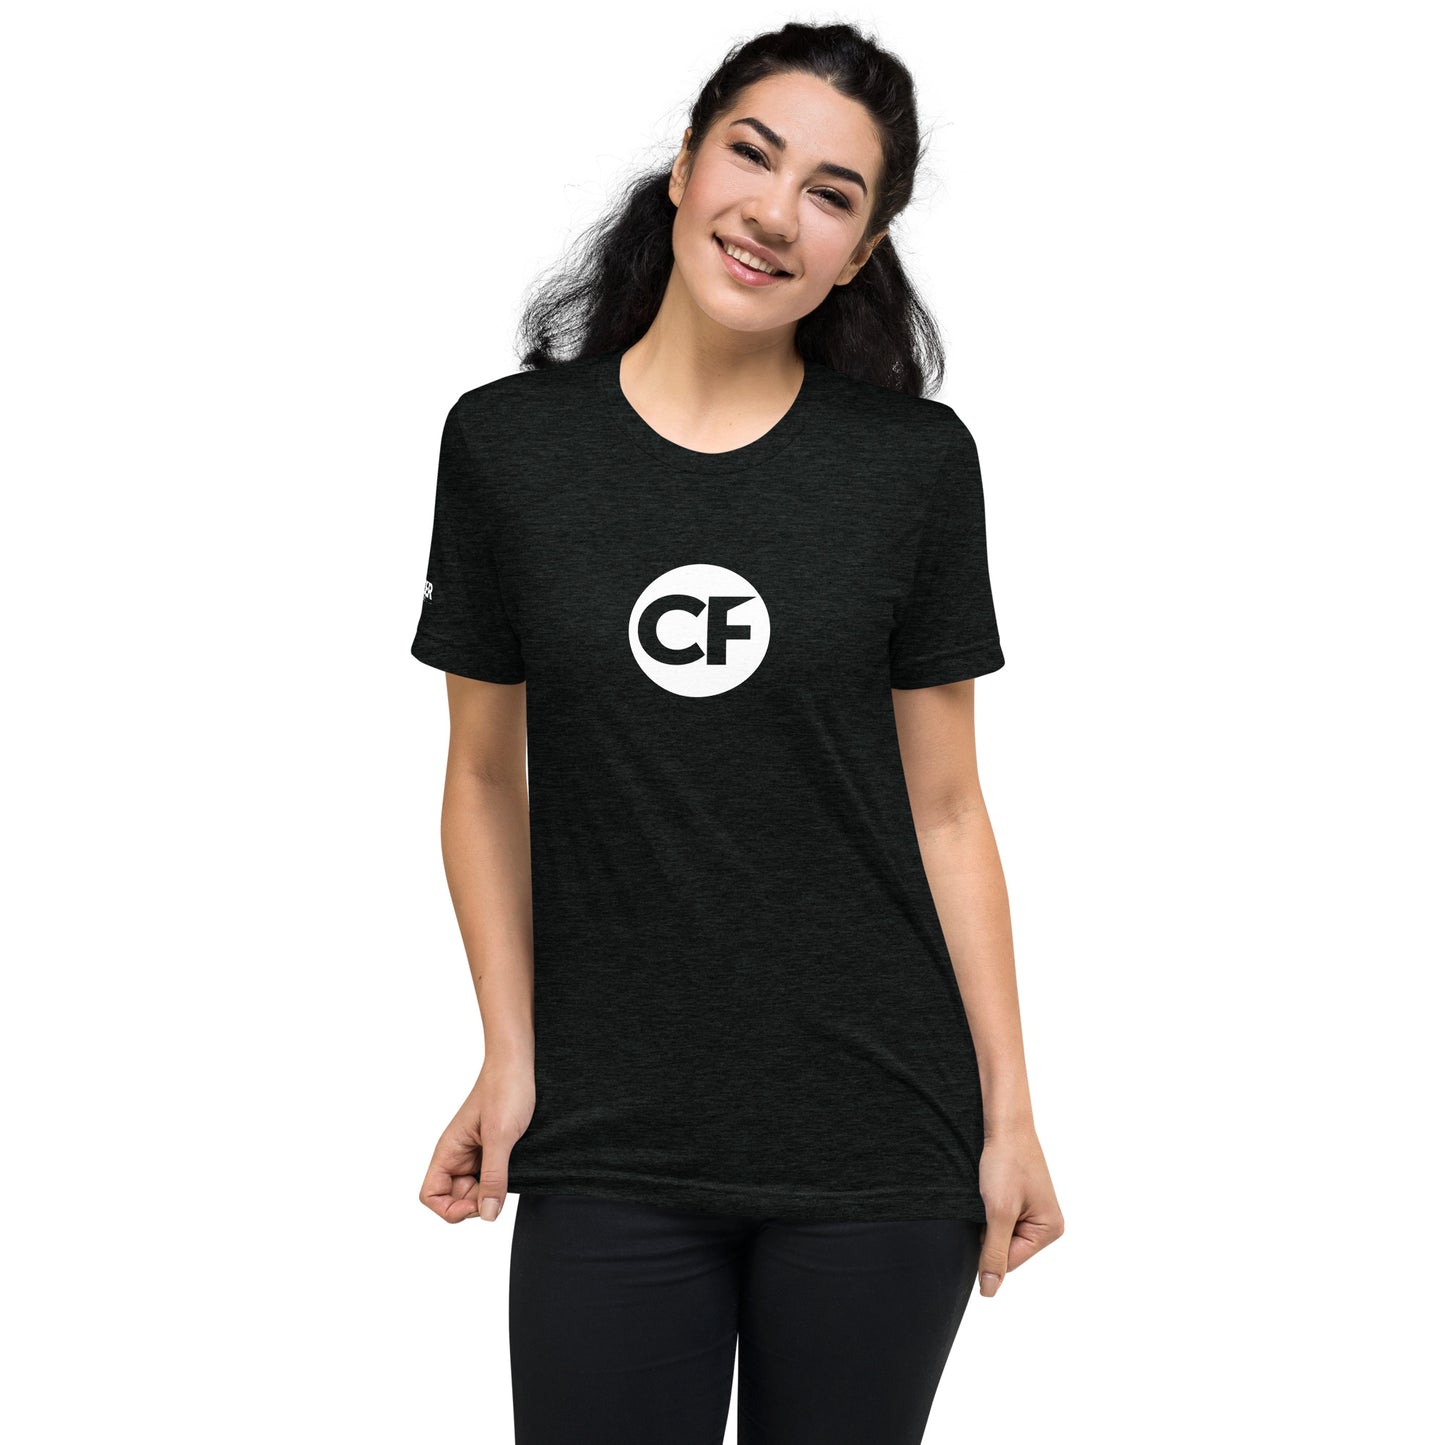 CF T-Shirt